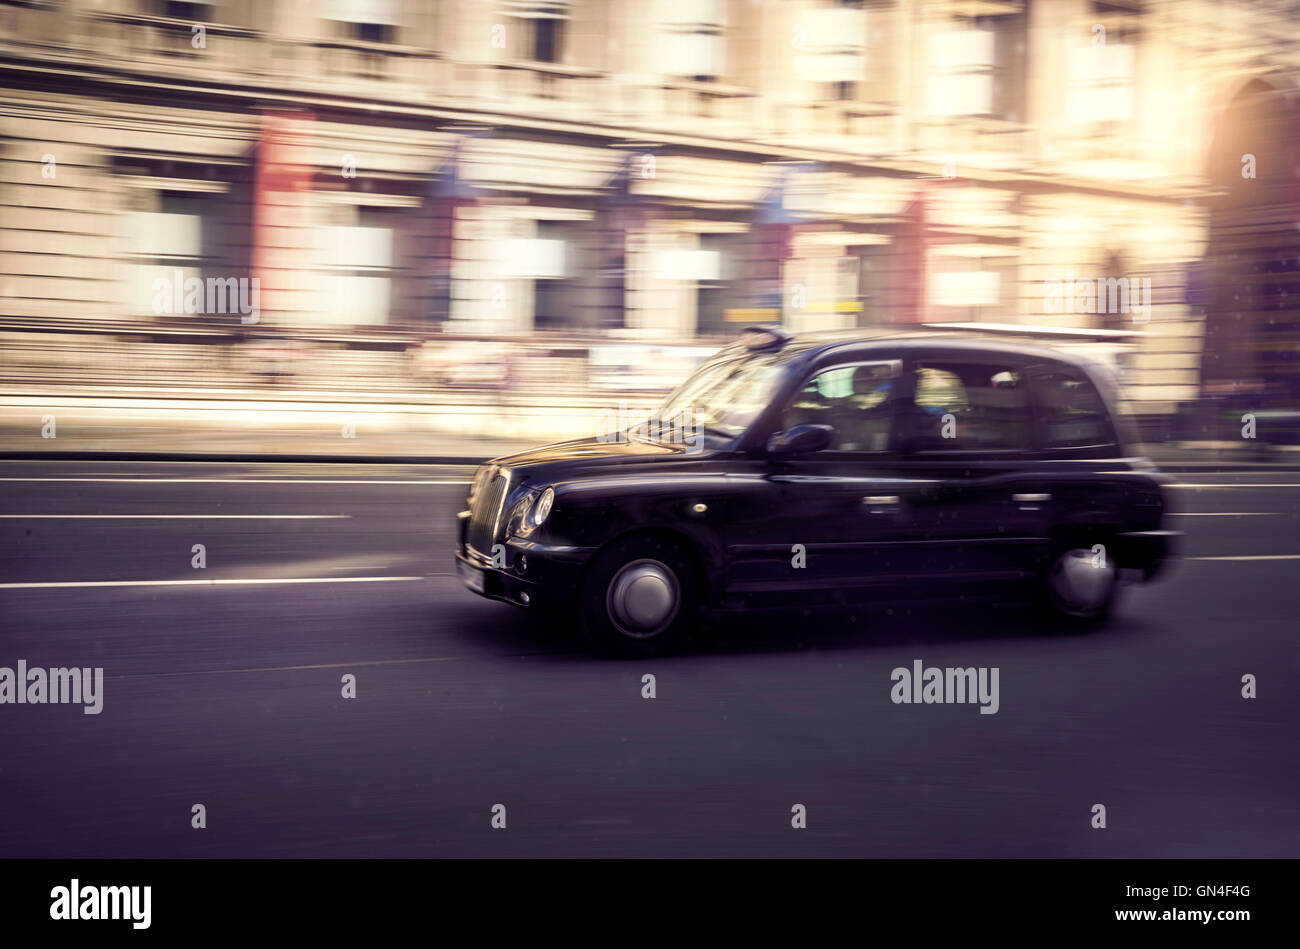 Ein London Taxi oder "Black Cab" in der Straße. Vintage Instagram Filter Stil Stockfoto